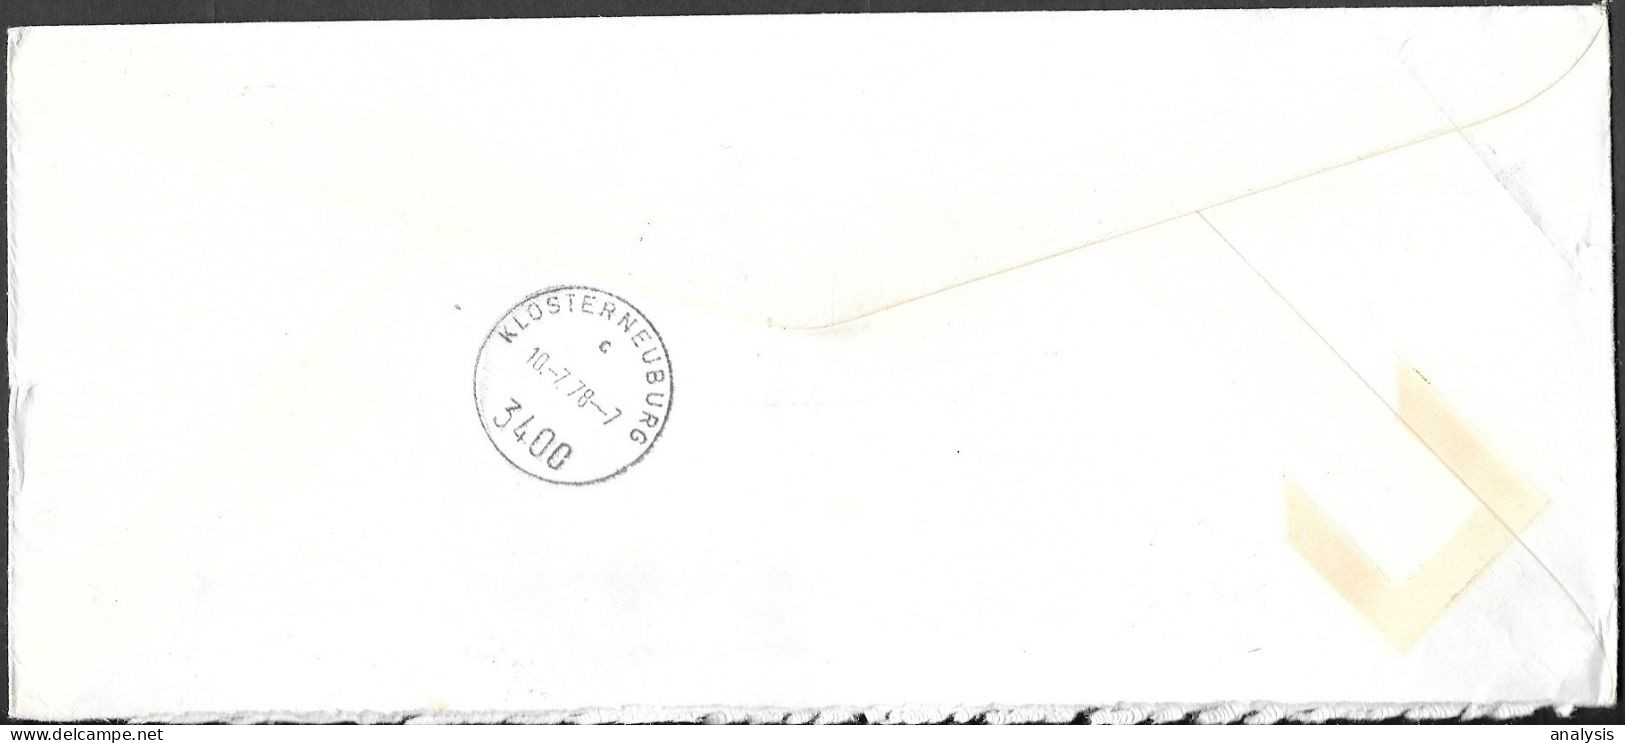 Argentina Registered Cover Mailed To Klosterneuburg Austria 1978. 1250P Rate Catedral De Salta Stamp - Storia Postale